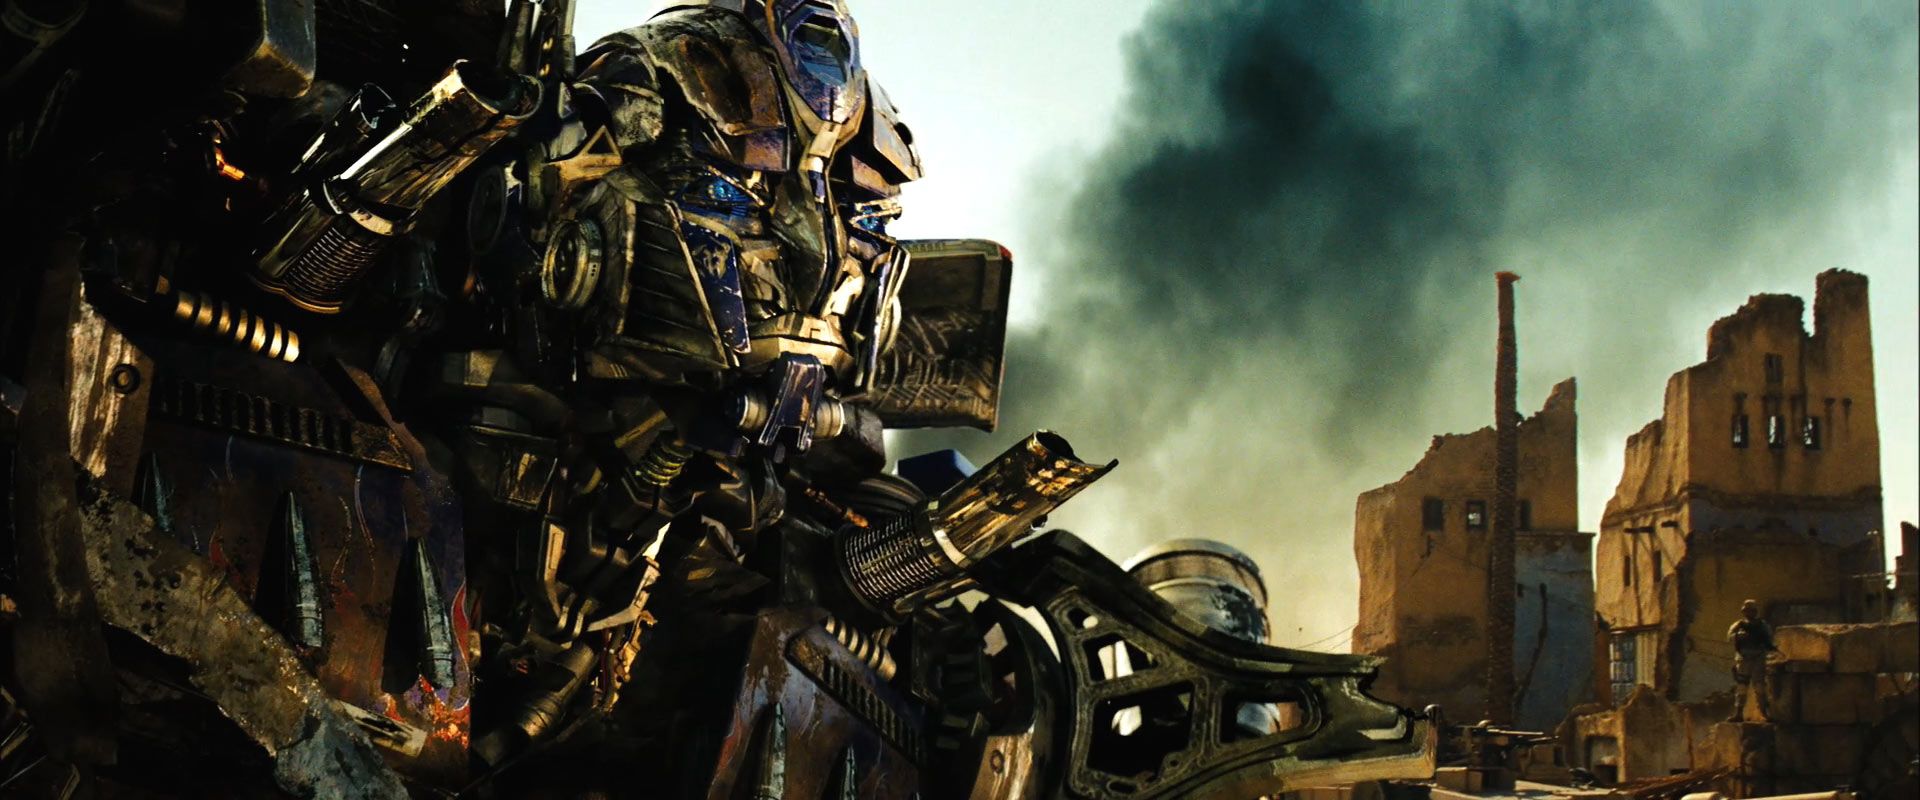 Transformers 2 Trailer Photo #5